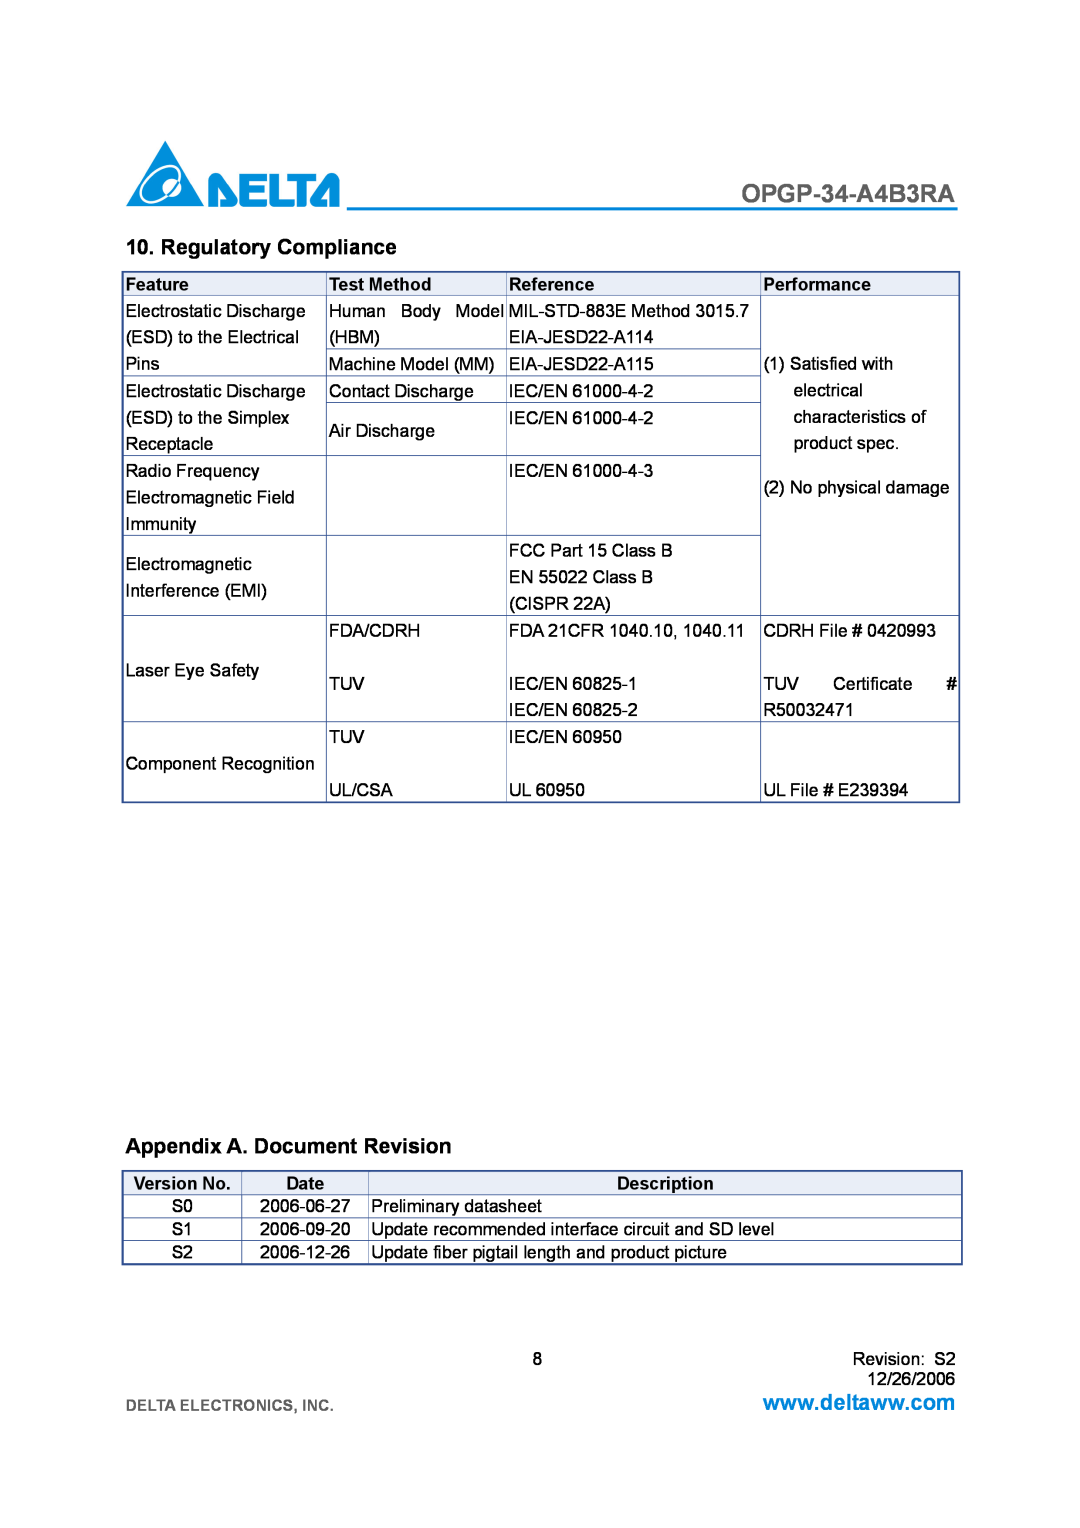 Delta Electronics OPGP-34-A4B3RA manual Regulatory Compliance, Appendix A. Document Revision 